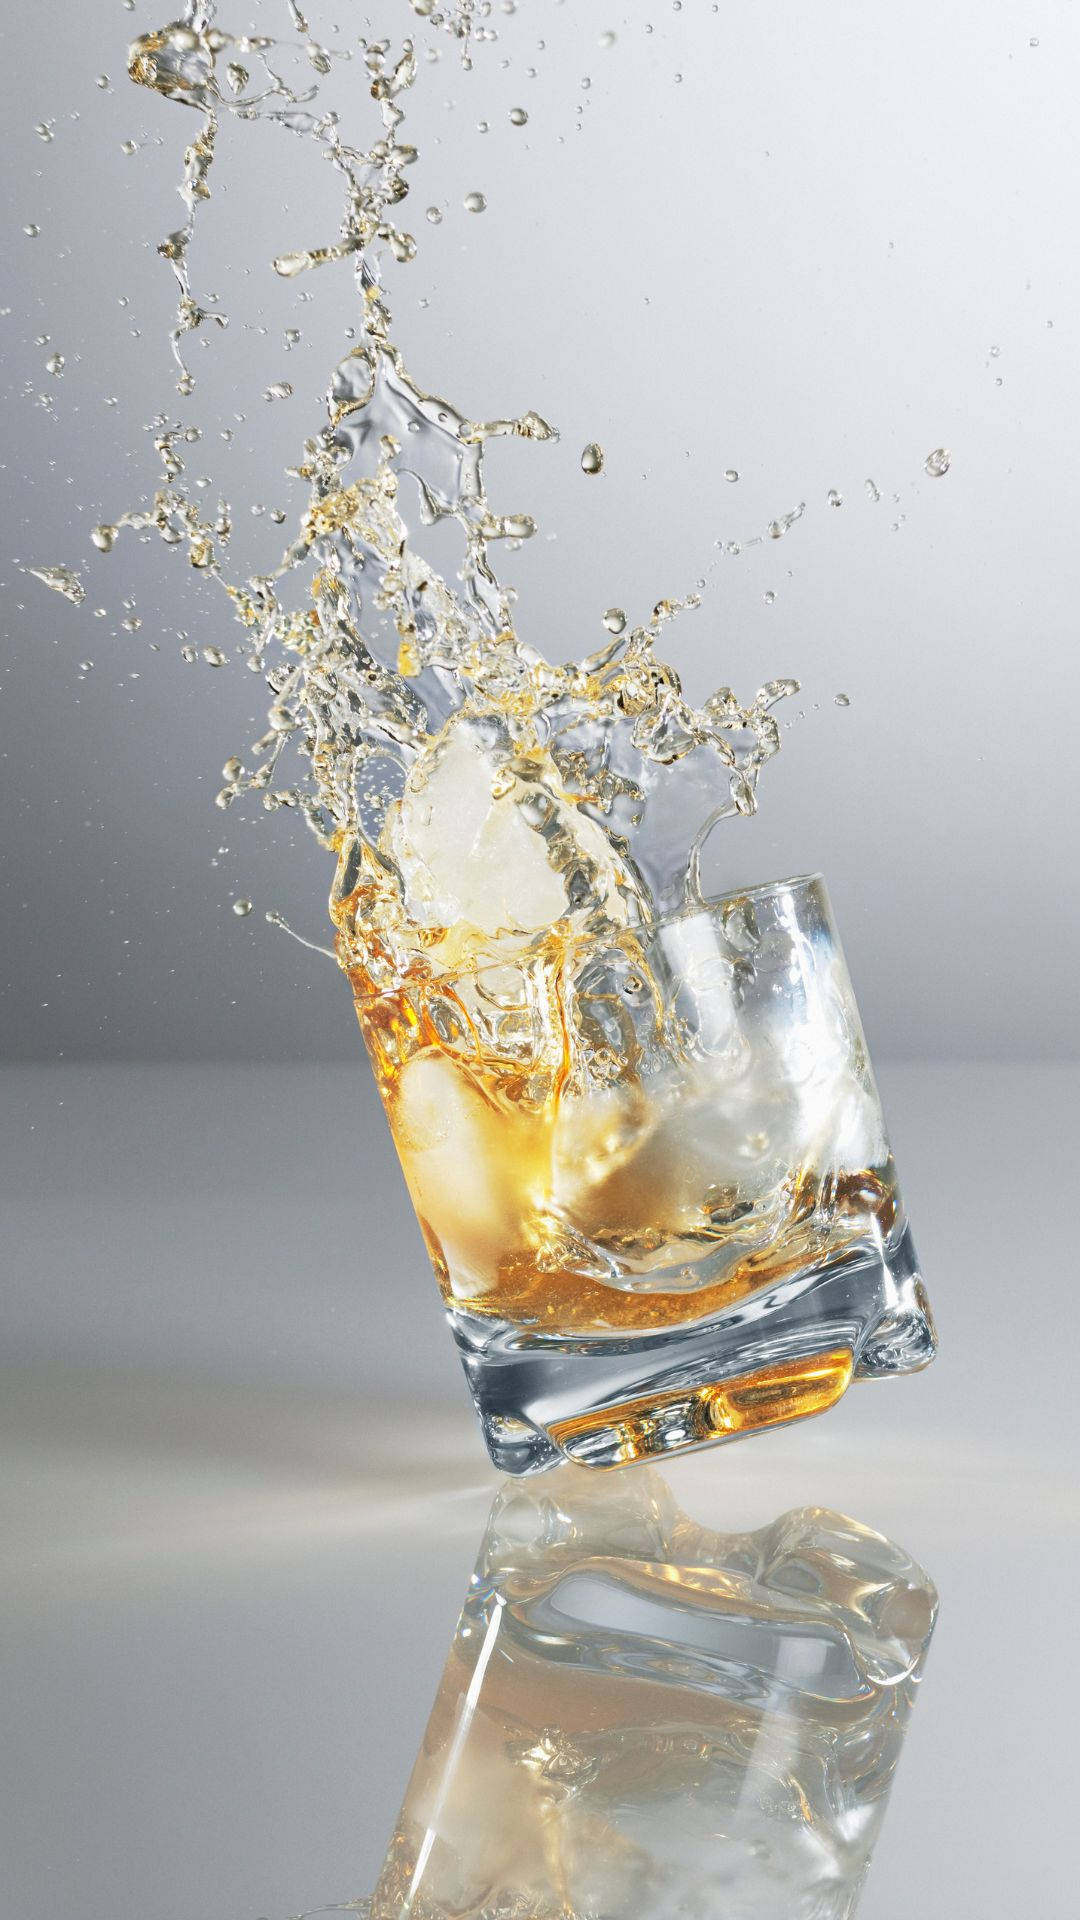 Splash Of Alcohol In Shot Glass Background